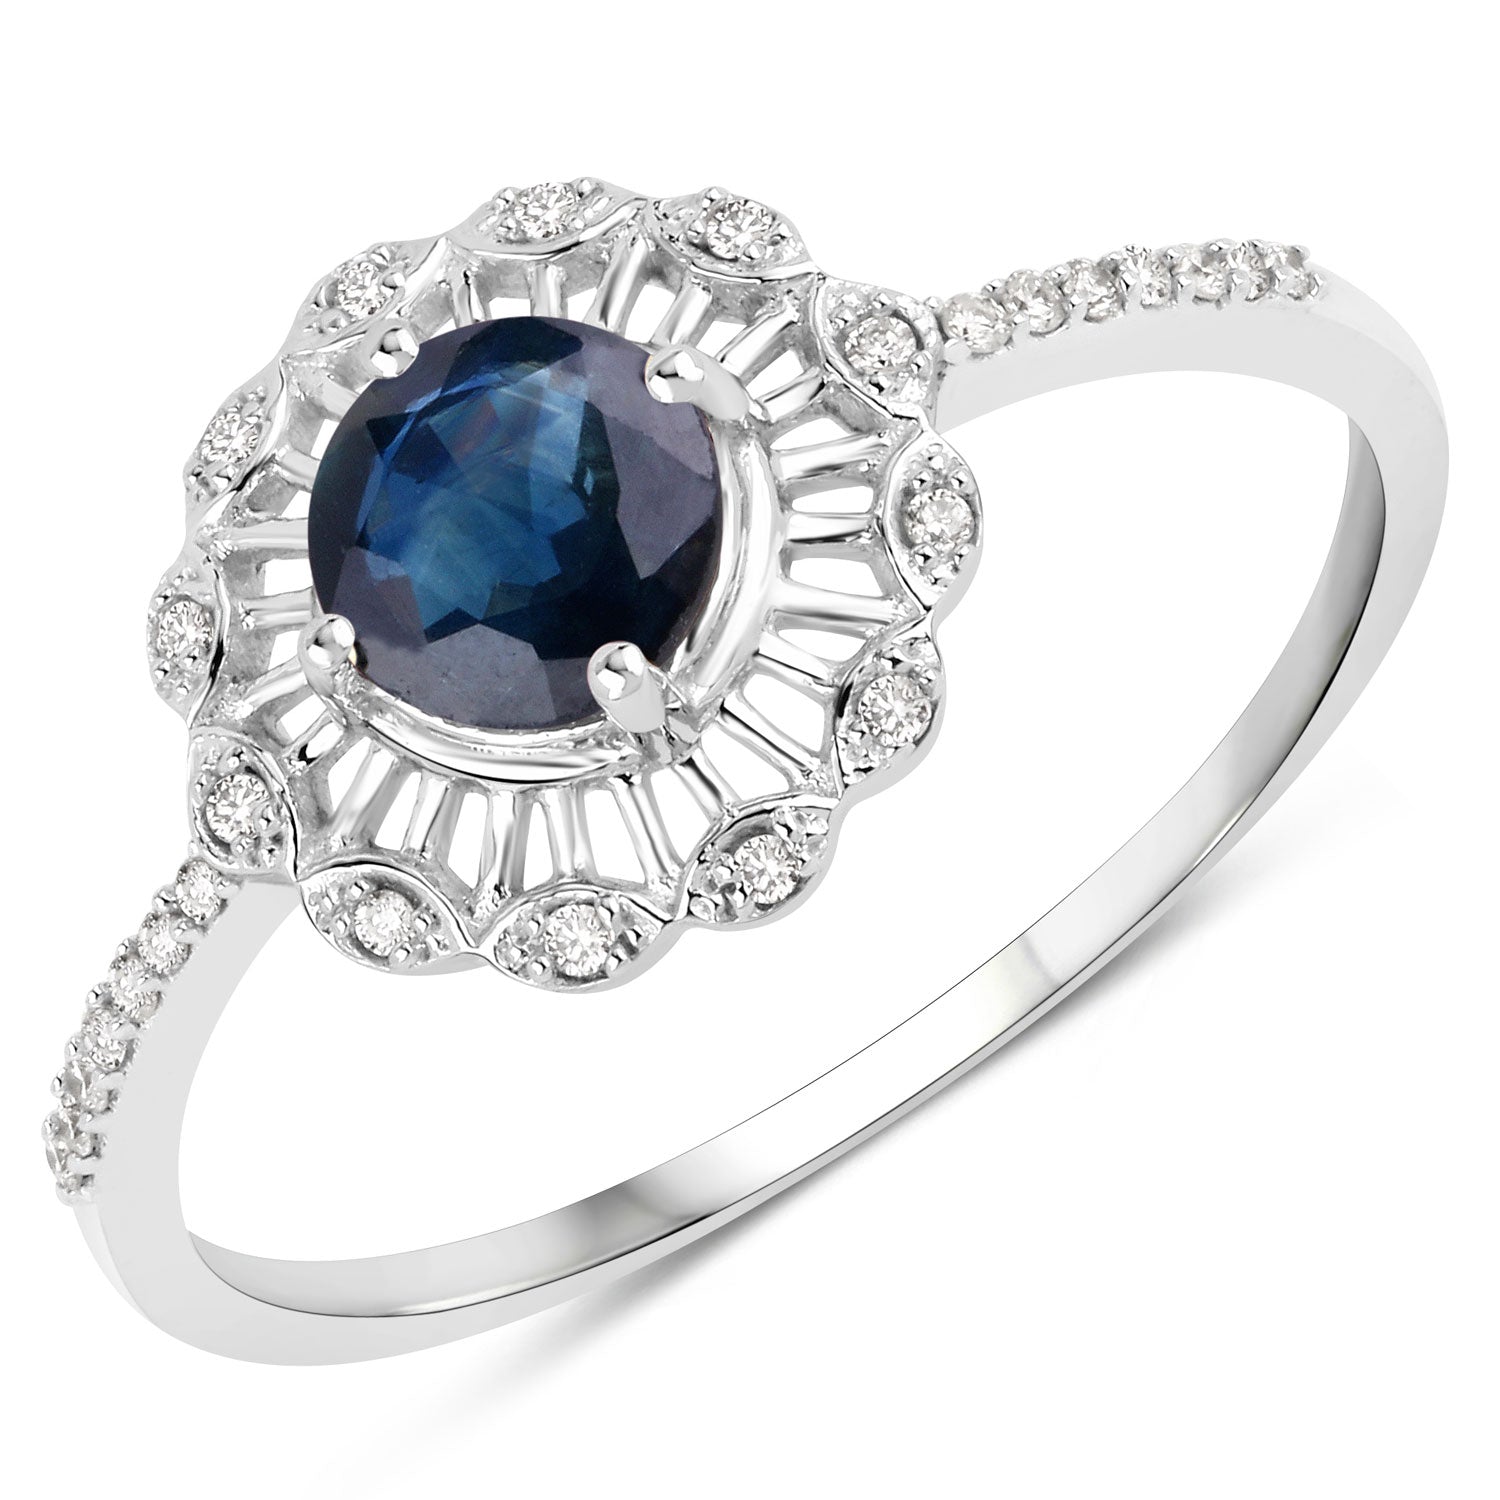 0.72 Carat Genuine Blue Sapphire and White Diamond 14K White Gold Ring